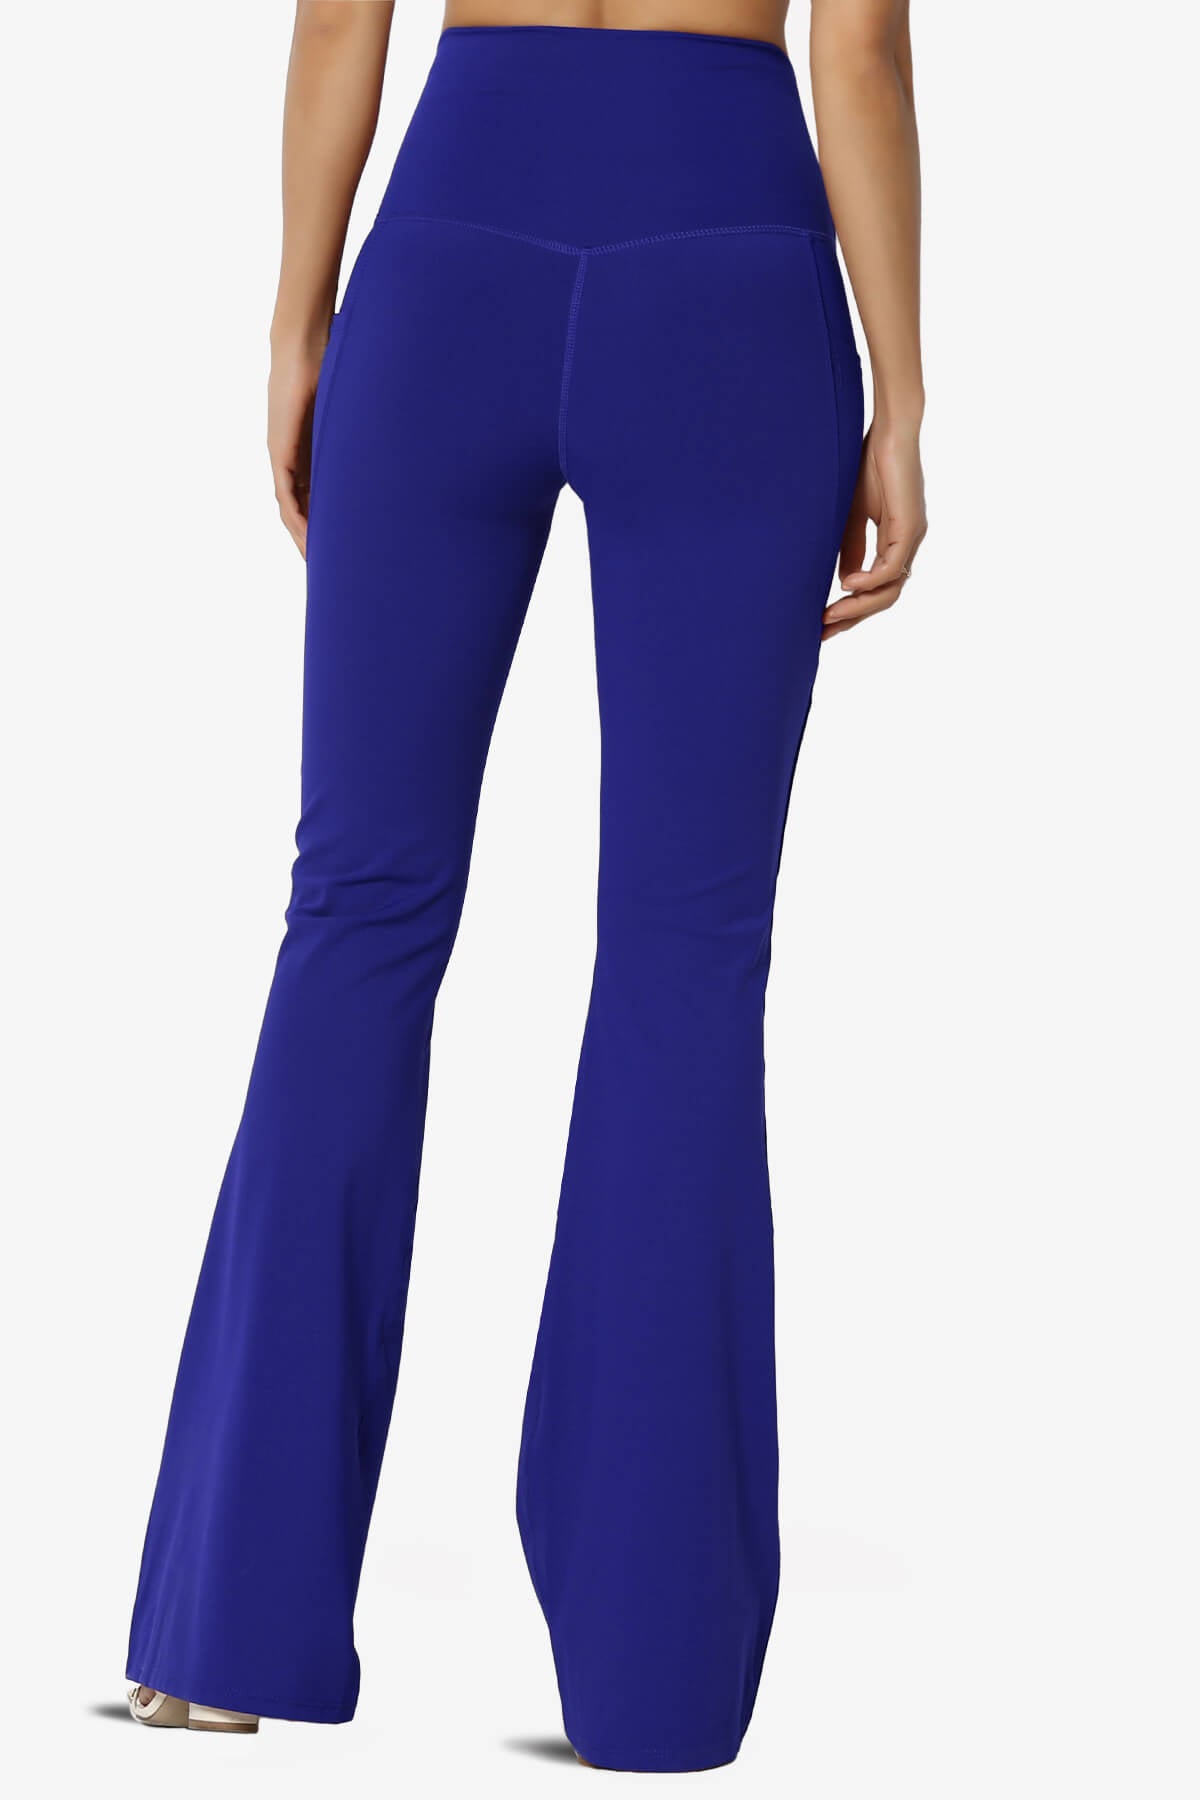 Gemma Athletic Pocket Flare Yoga Pants BRIGHT BLUE_2